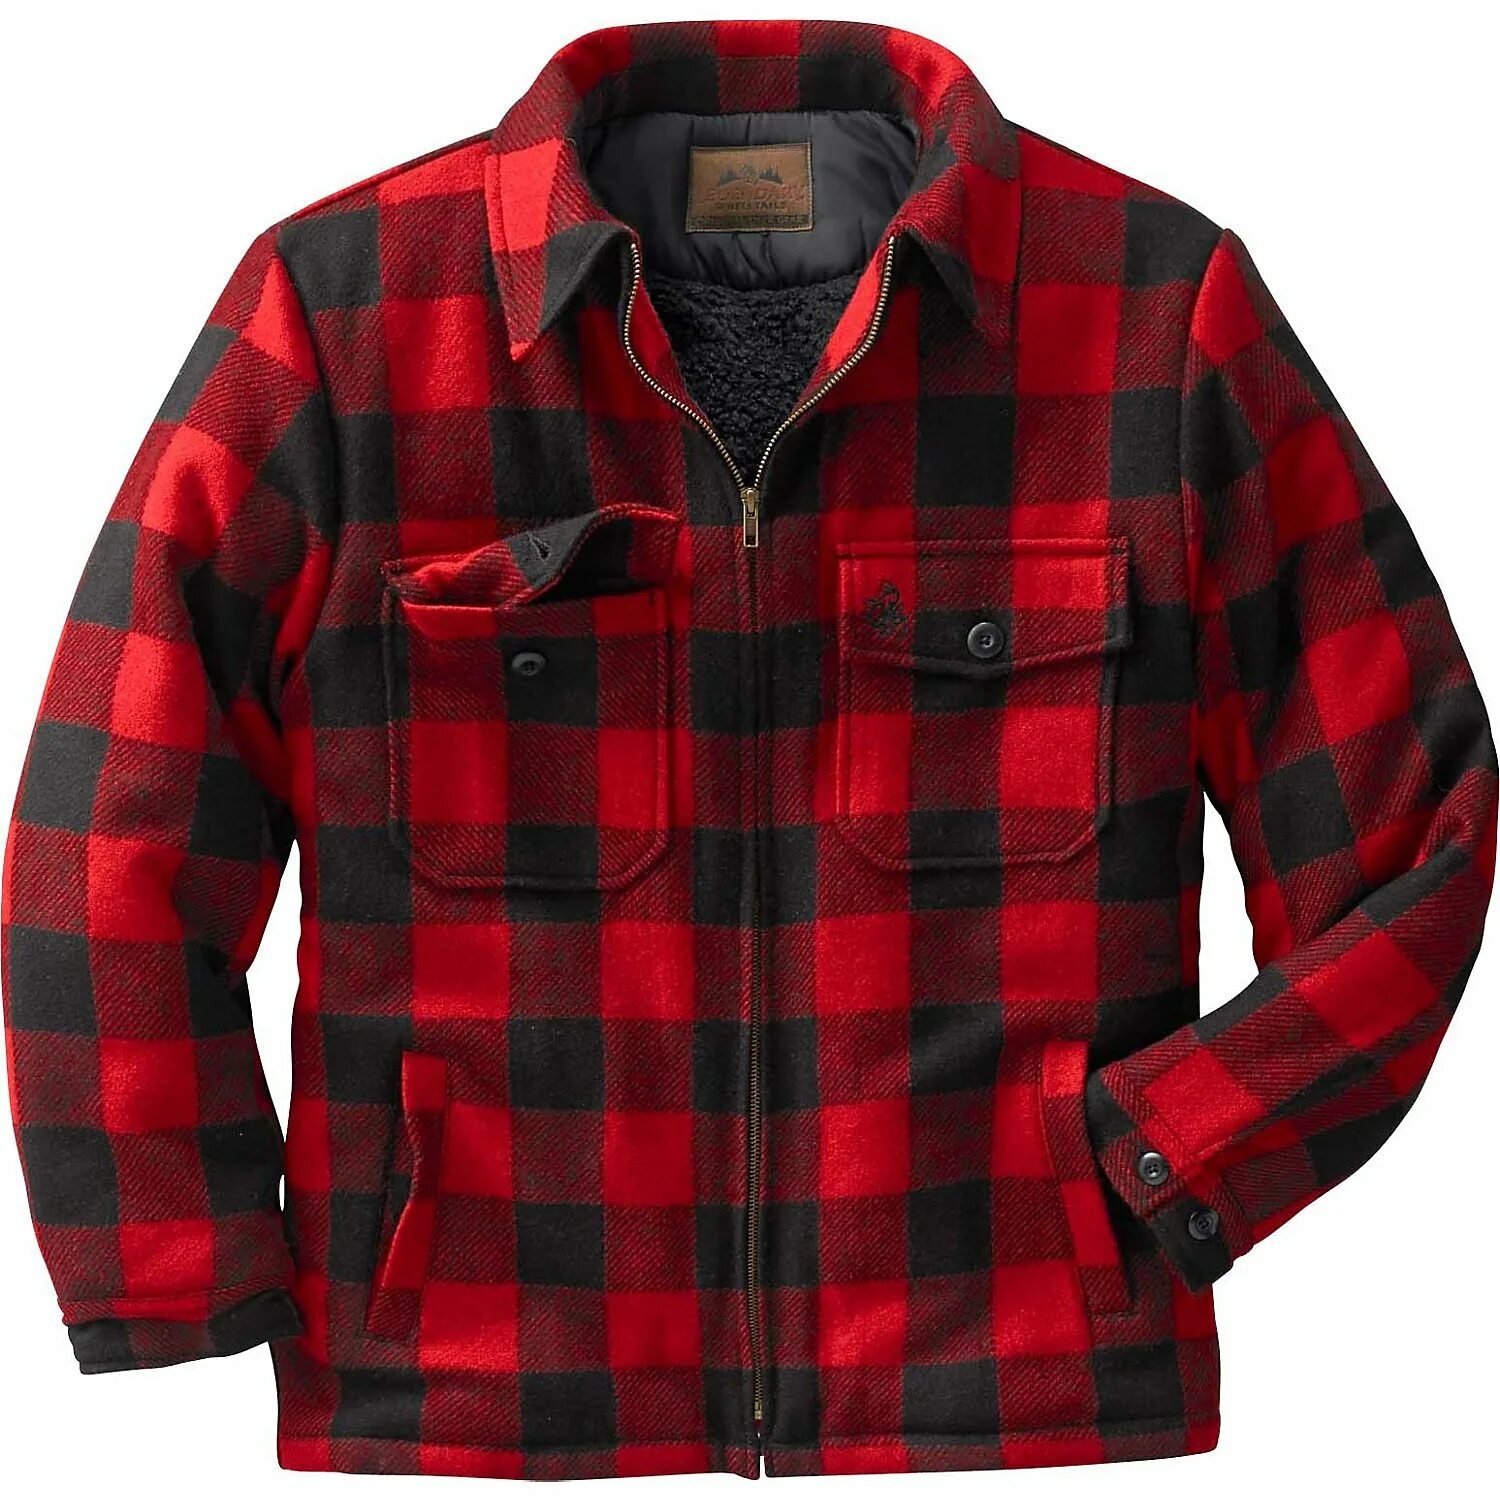 Теплая рубашка в клетку купить. Levis Sherpa Jacket Red Plaid. Рубашка Legendary Whitetails. Mens Flannel Shirt lined Jacket. Red Plaid куртки мужские.